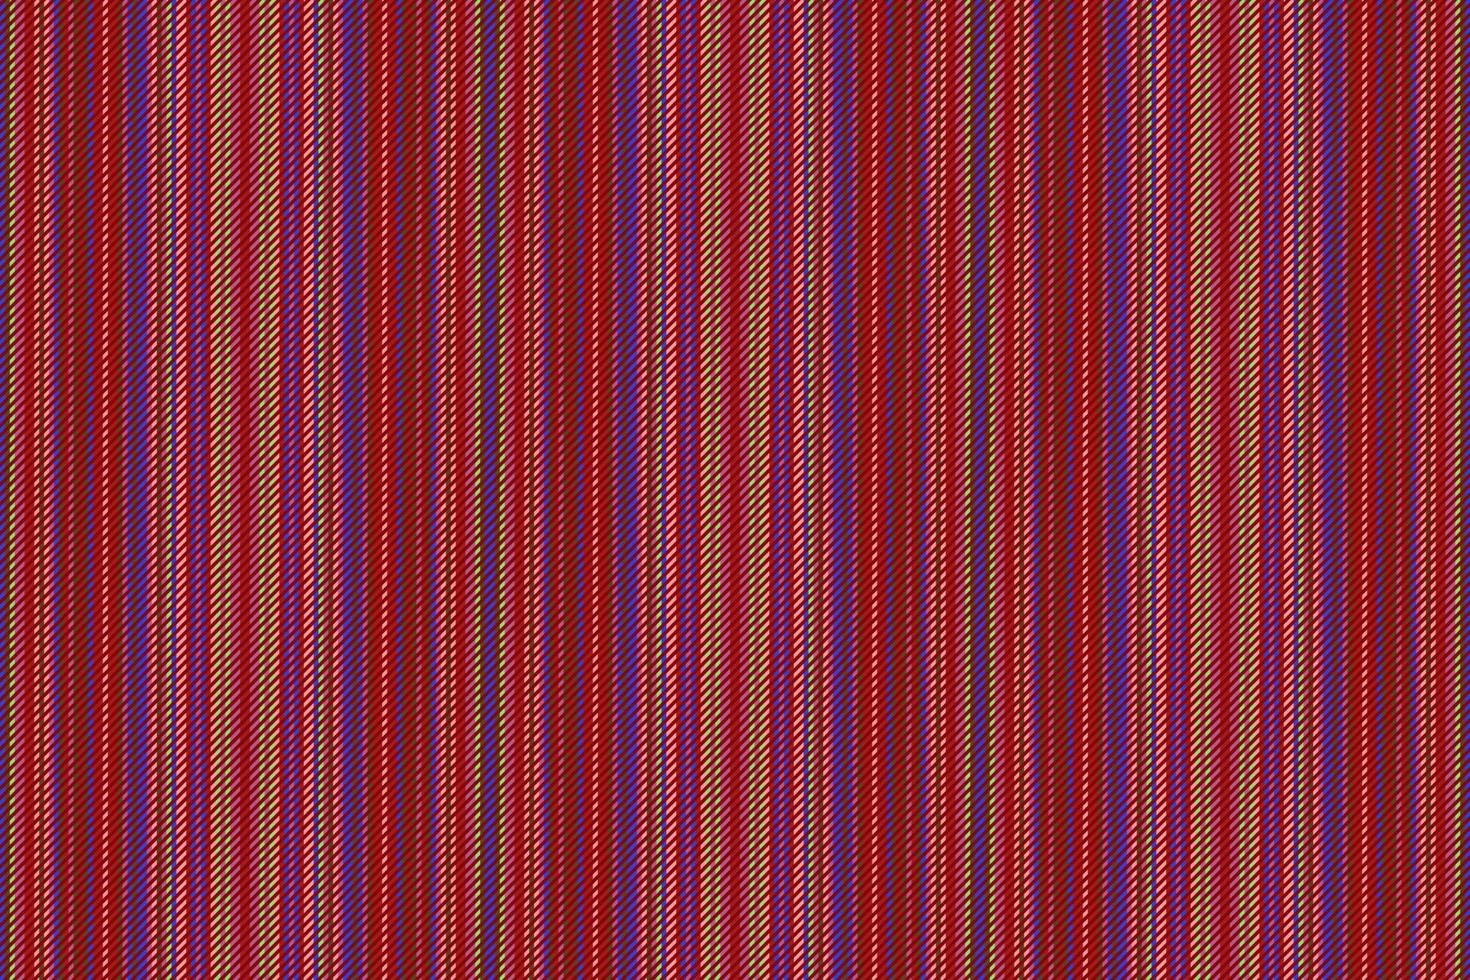 textil- bakgrund tyg. rader rand mönster. textur vertikal sömlös vektor. vektor